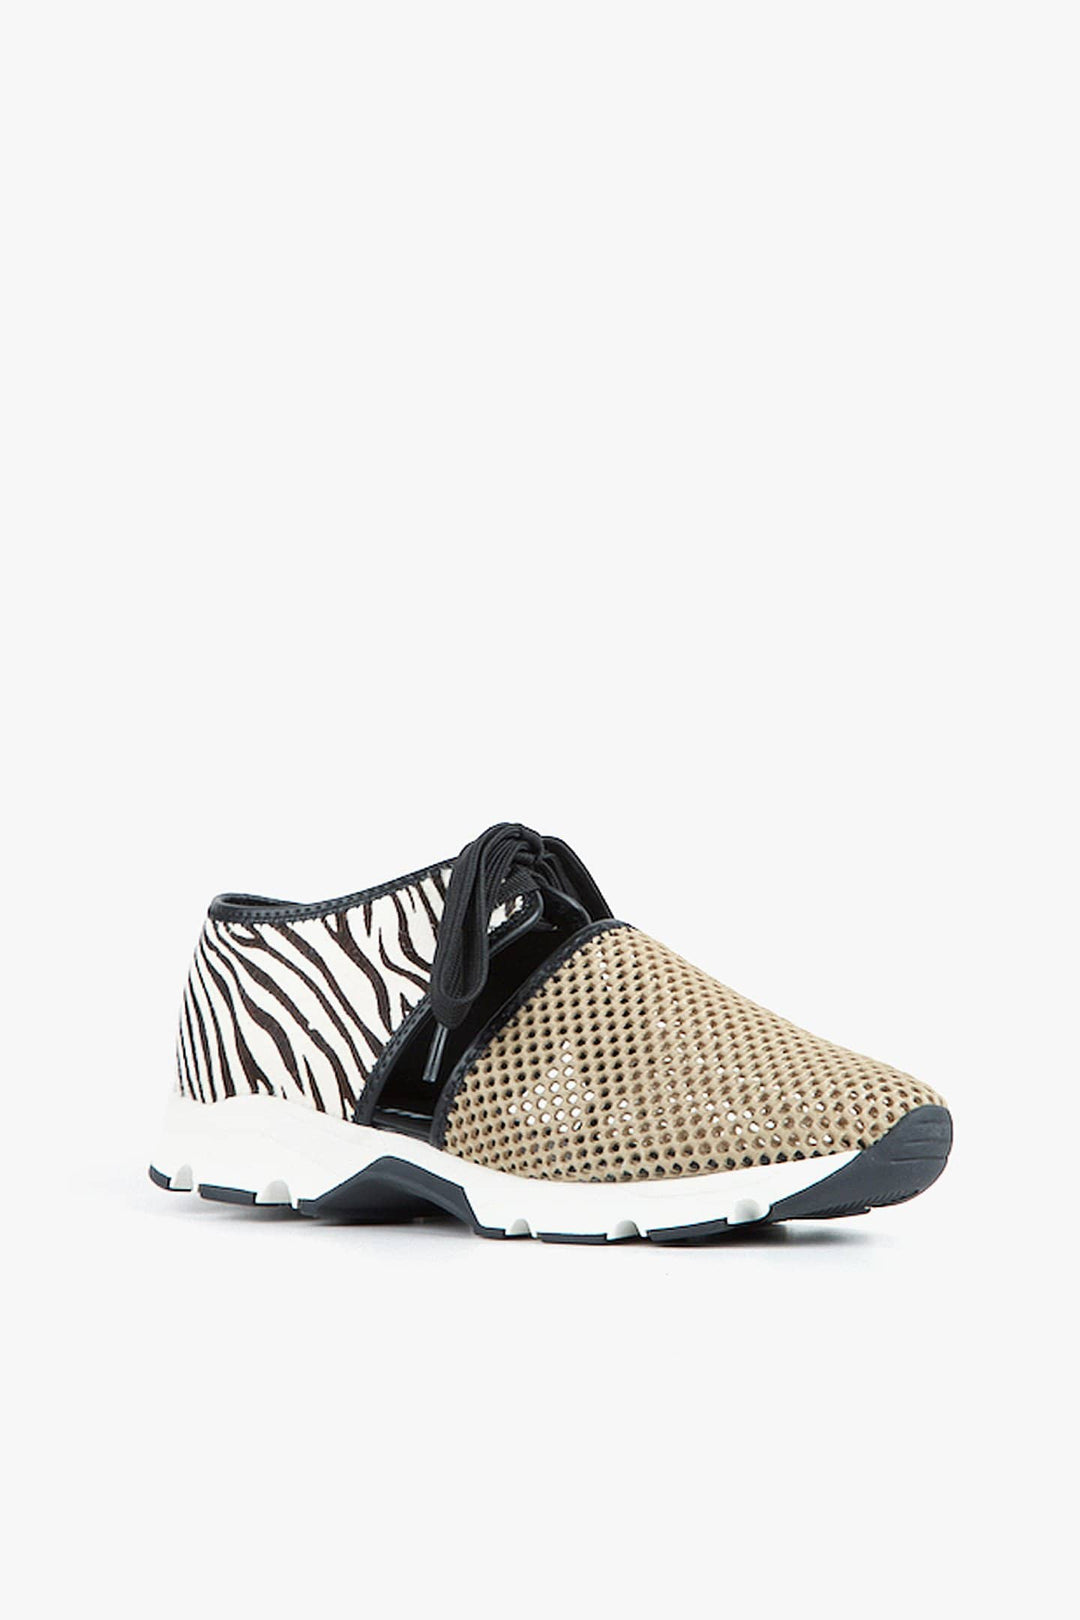 Women's Amazing Jungle Taupe/New Zebra Shoes - Orleans Shoe Co.